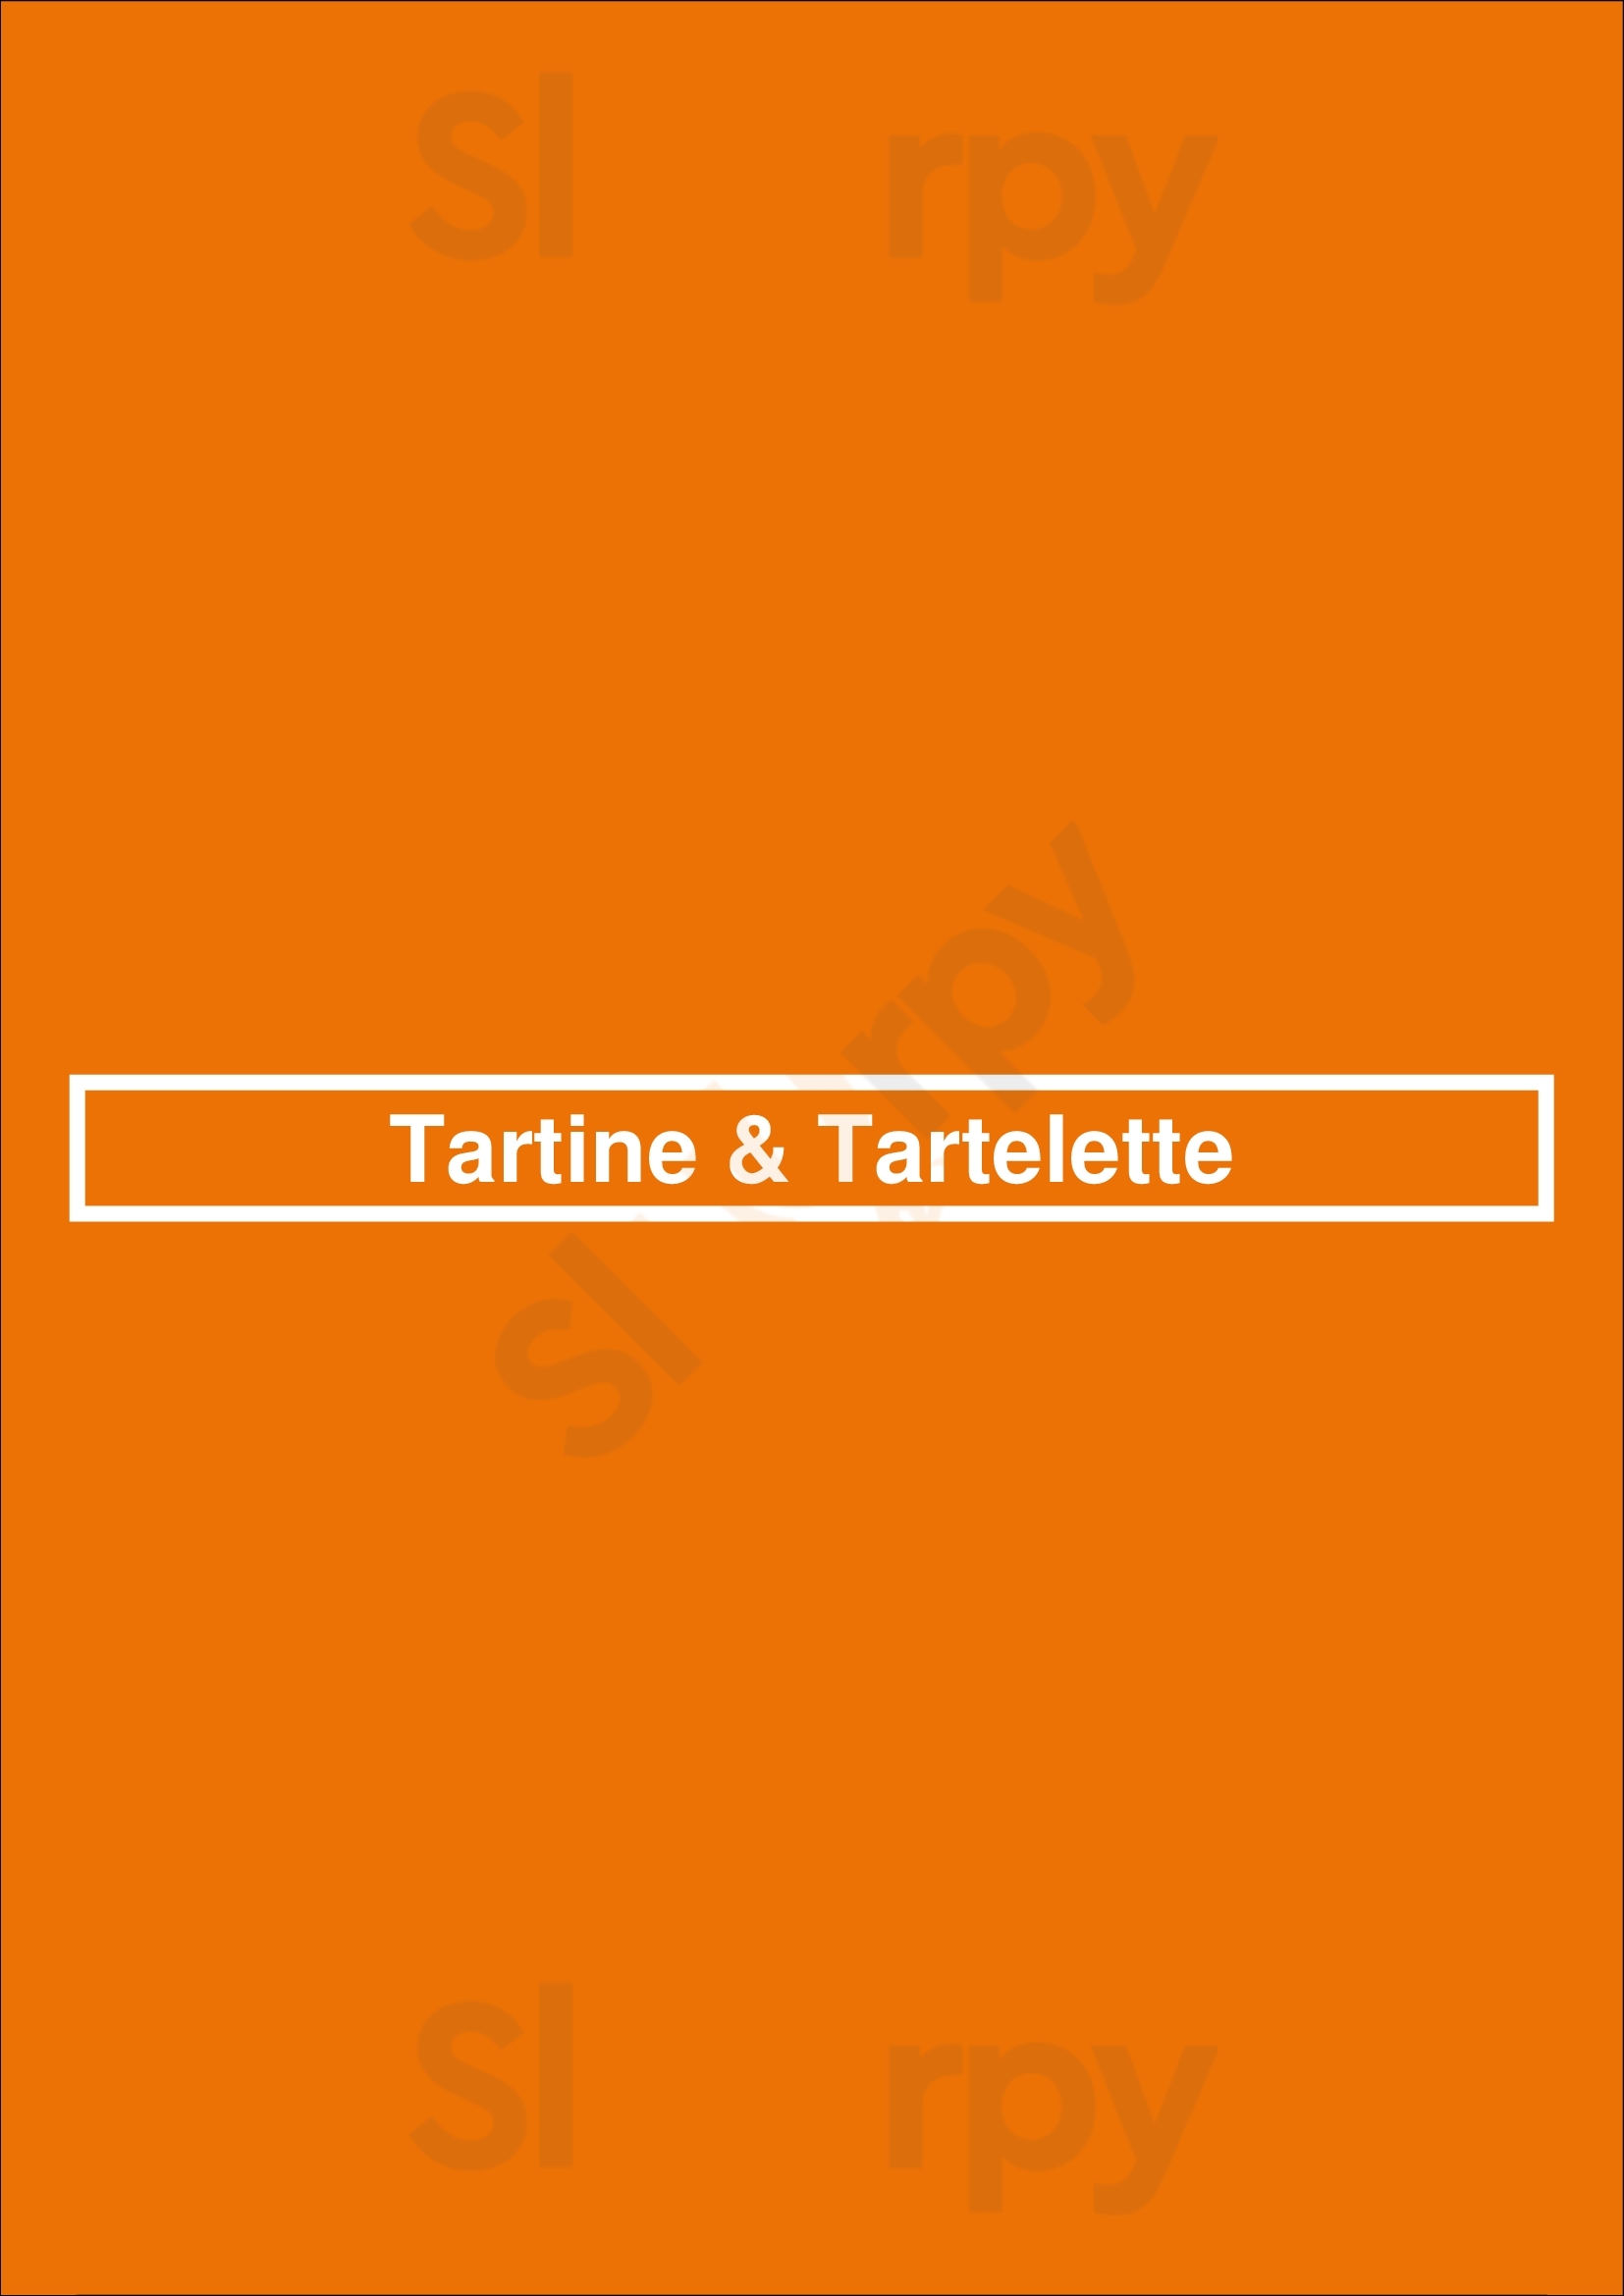 Tartine & Tartelette Naples Menu - 1